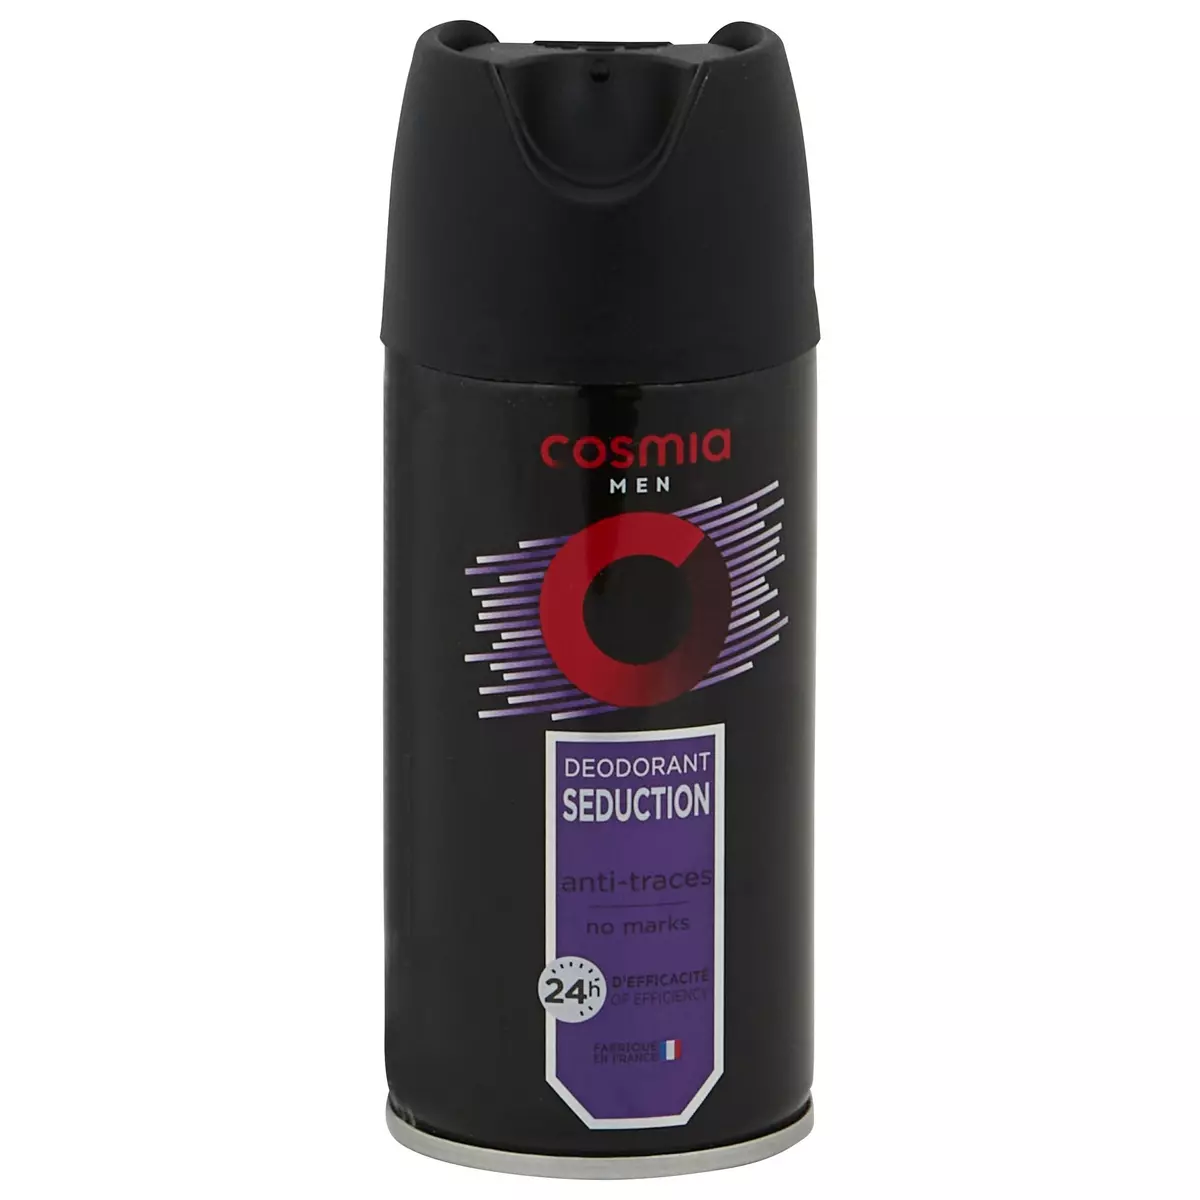 COSMIA MEN Déodorant spray homme séduction 24h anti-traces 150ml